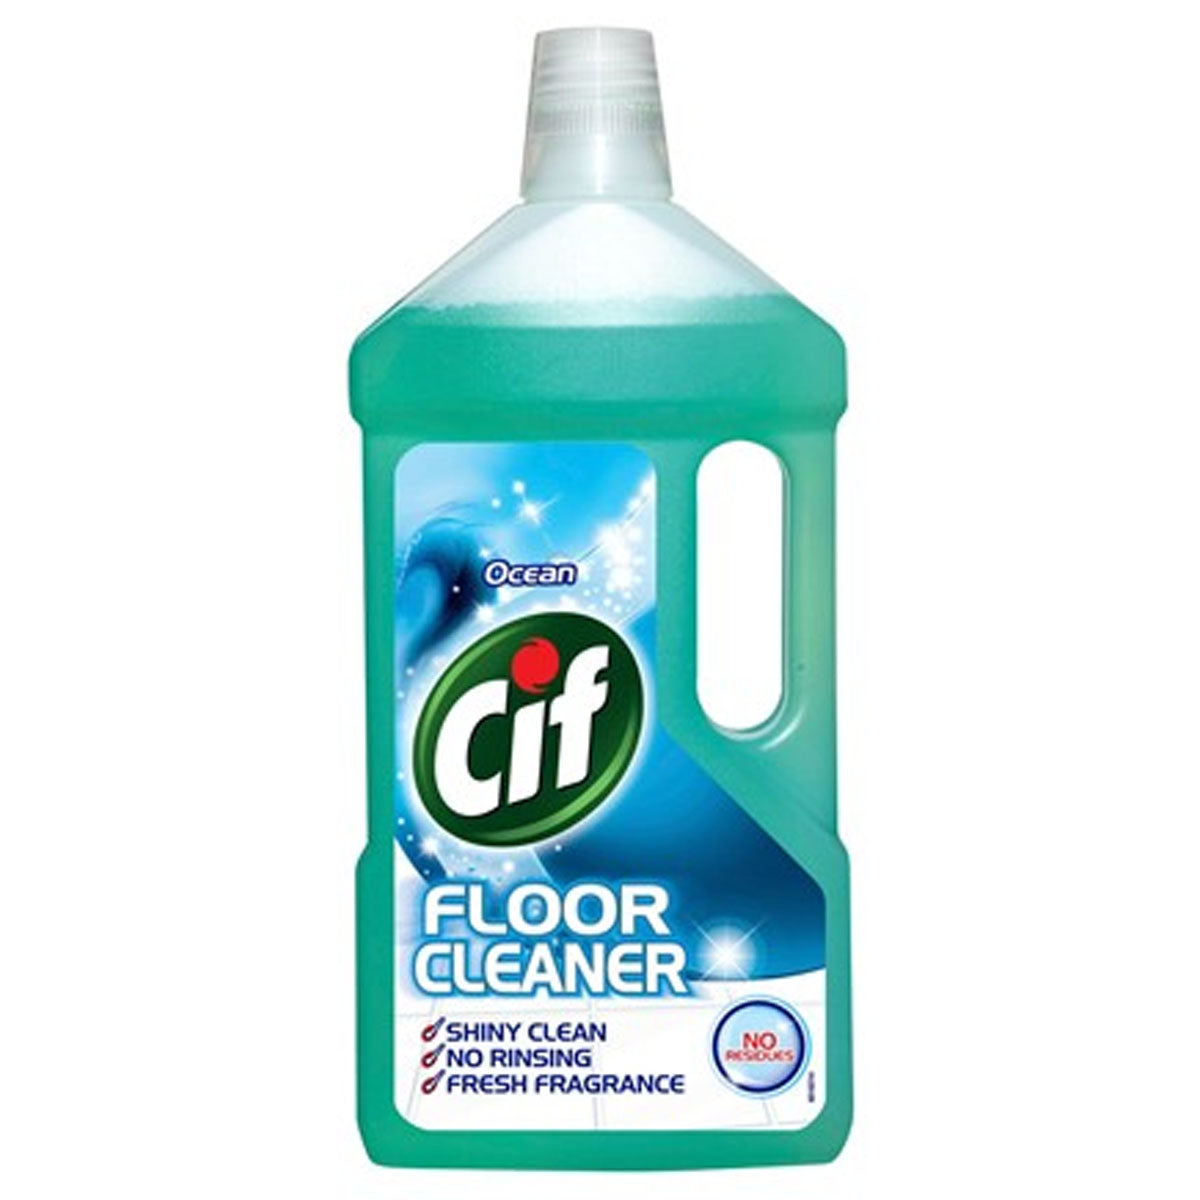 Cif - Ocean Floor Cleaner - 950 ml - Continental Food Store